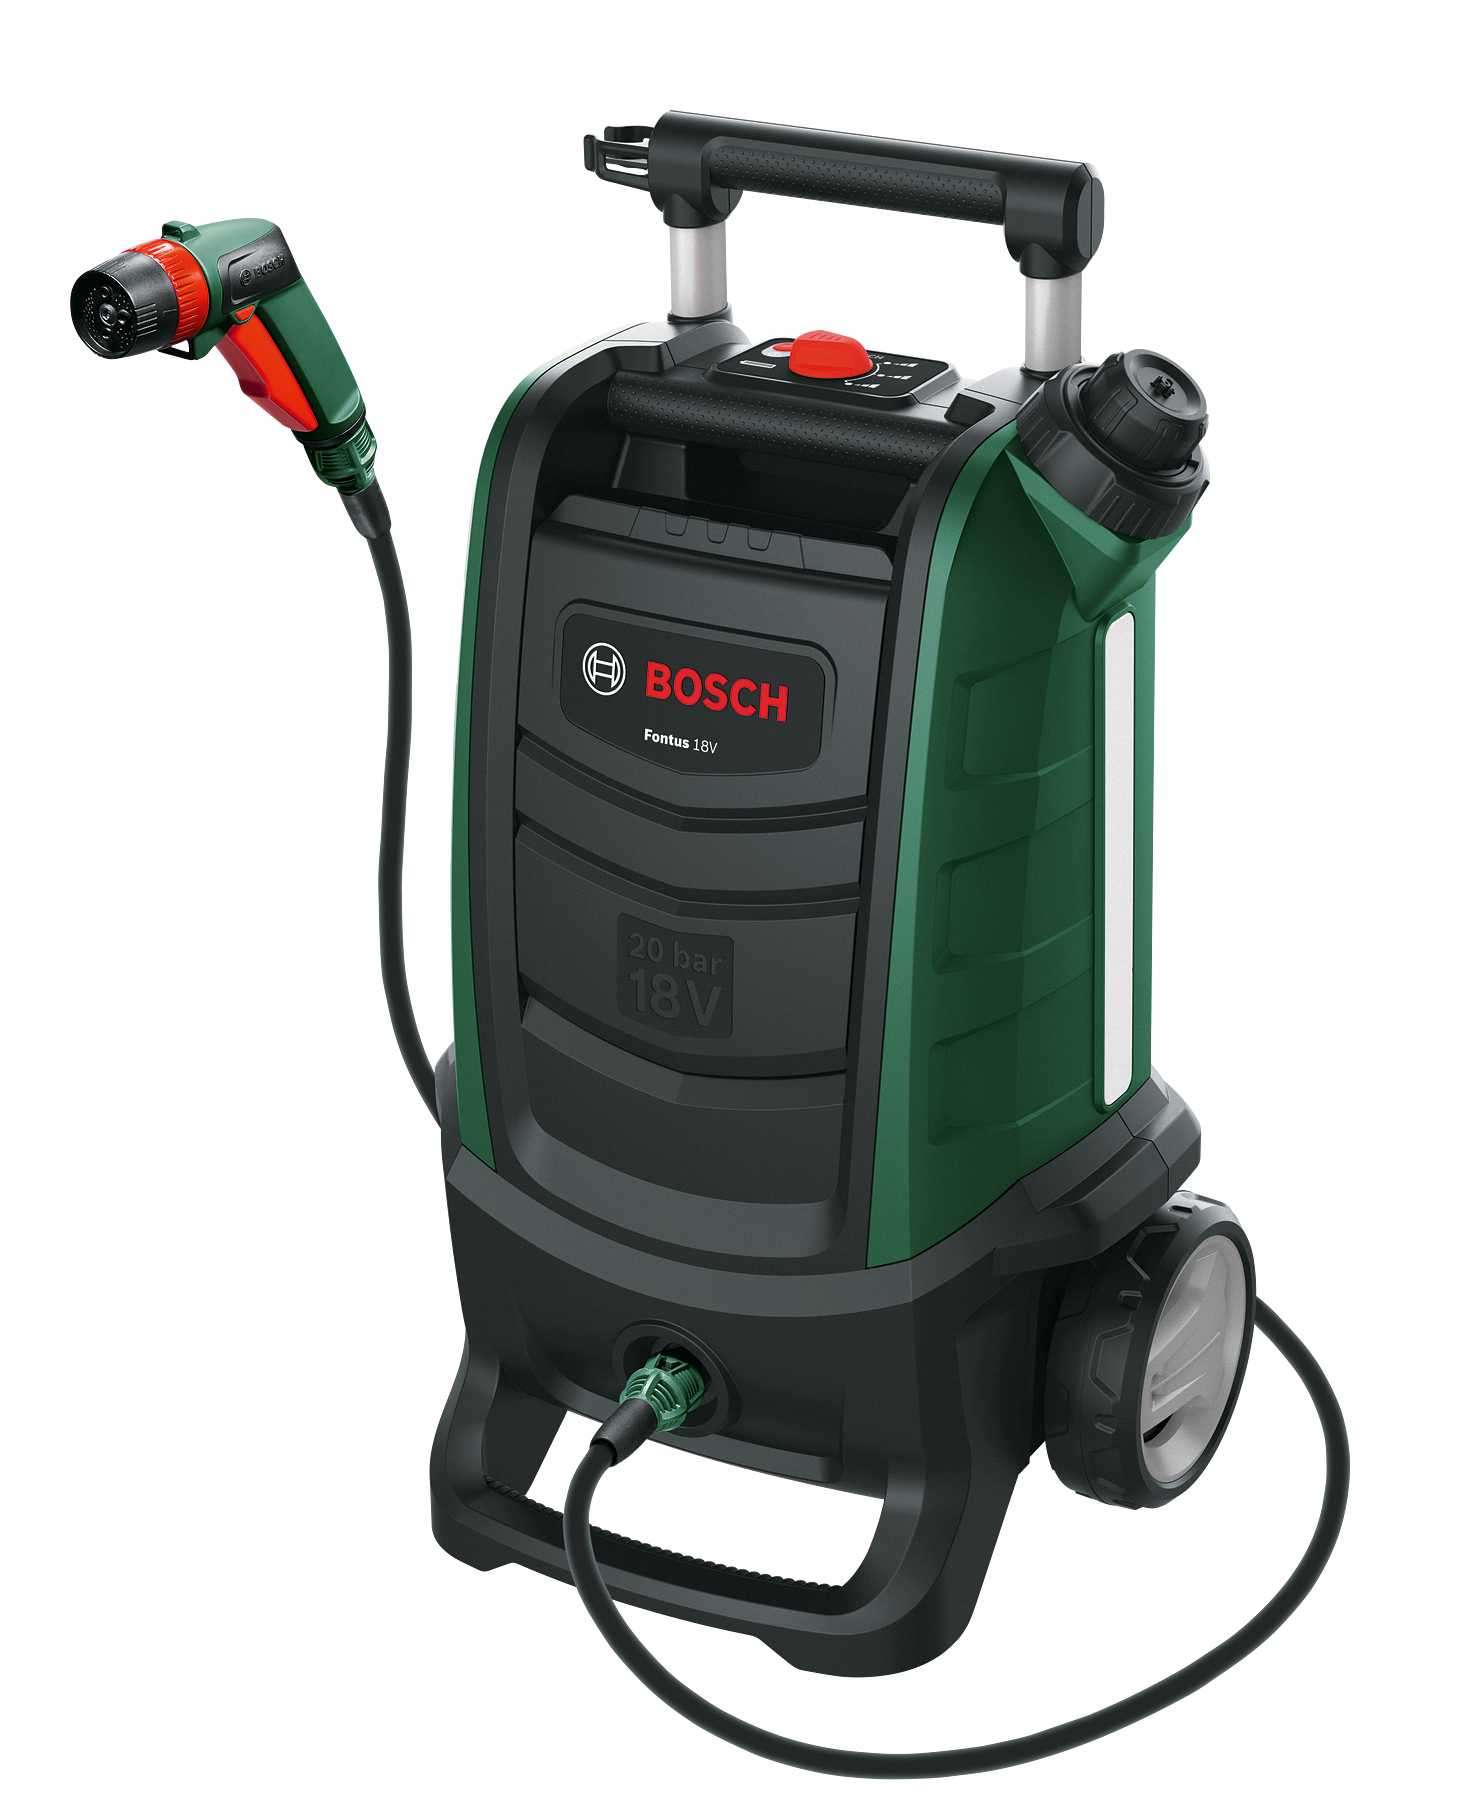 Image of Bosch Fontus 18V Cordless High Pressure Washer